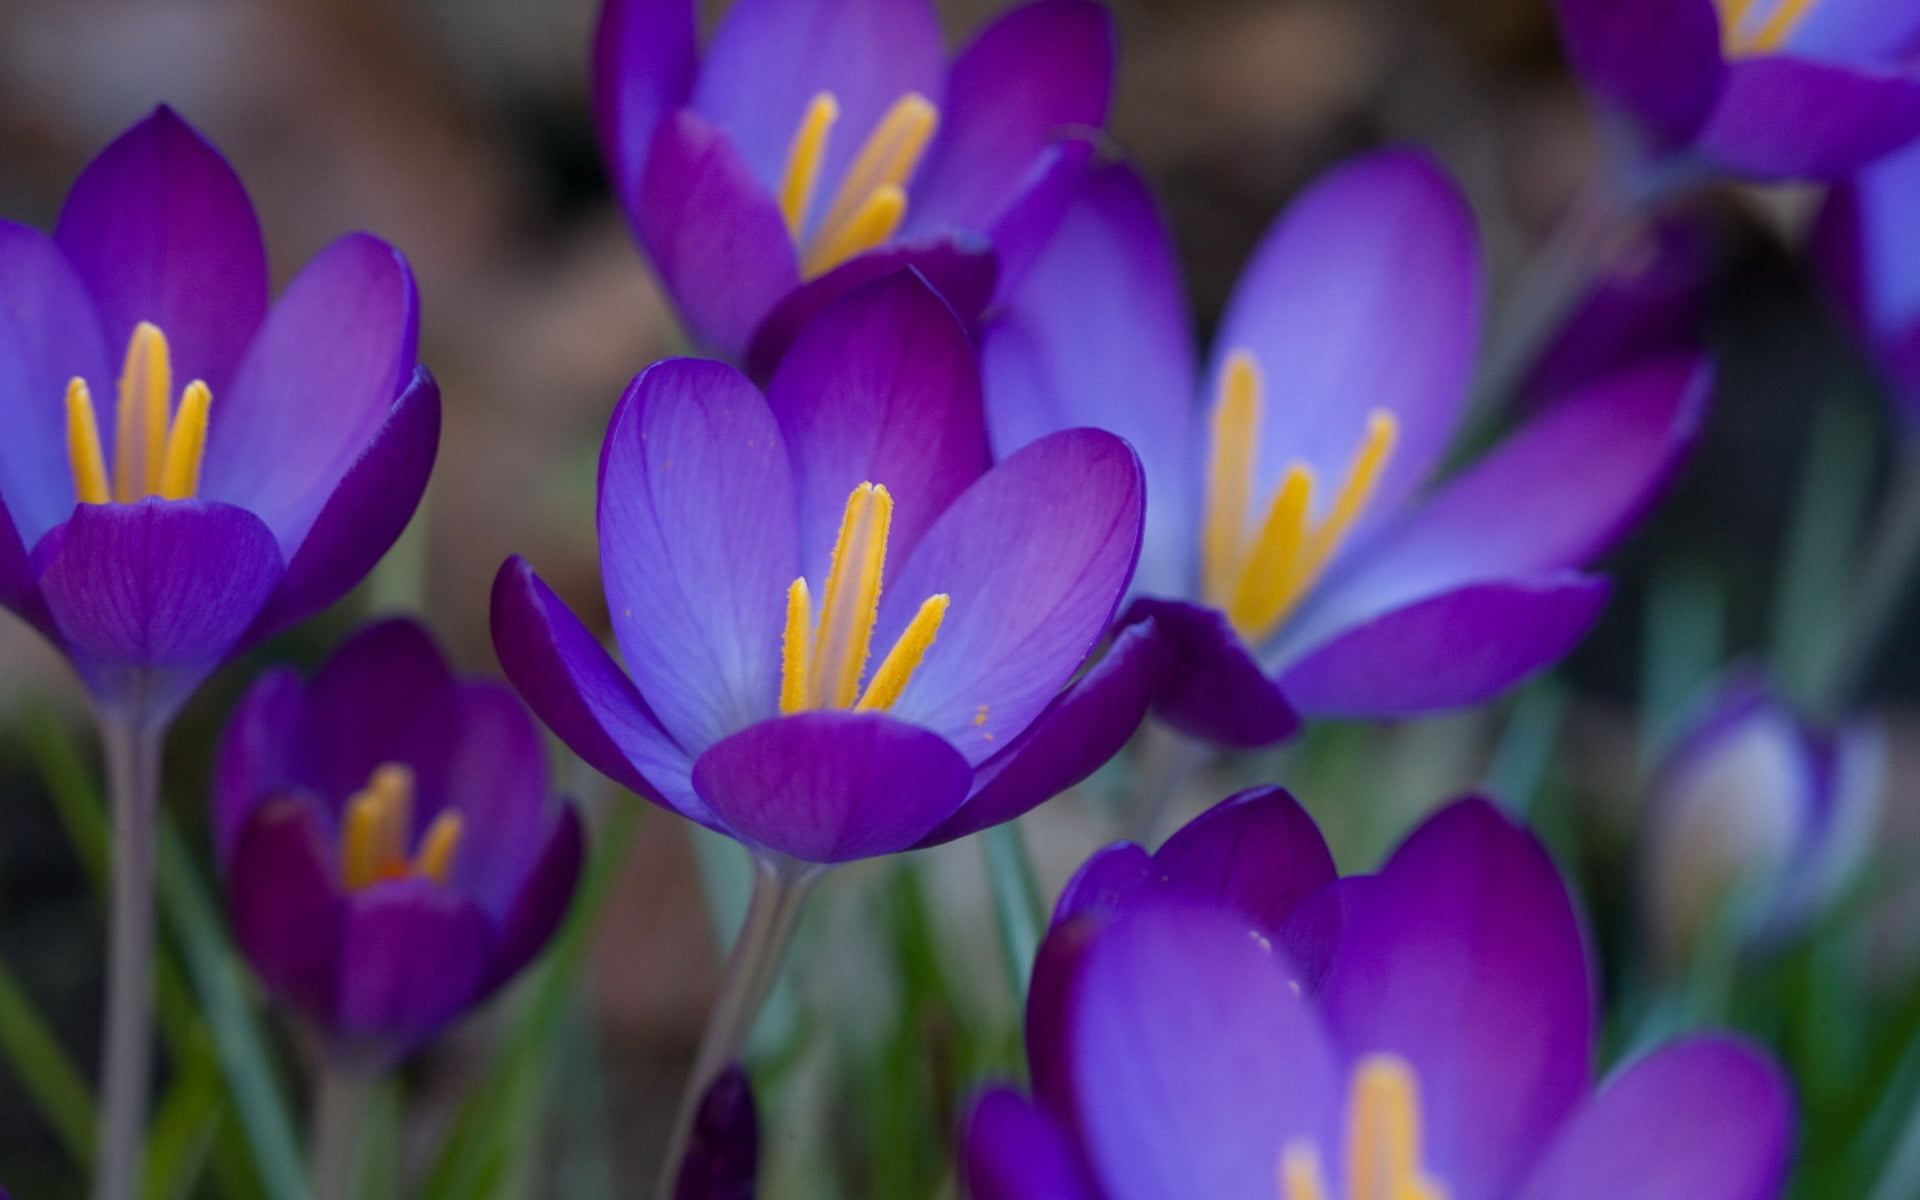 purple Crocus flowers in bloom close-up photo